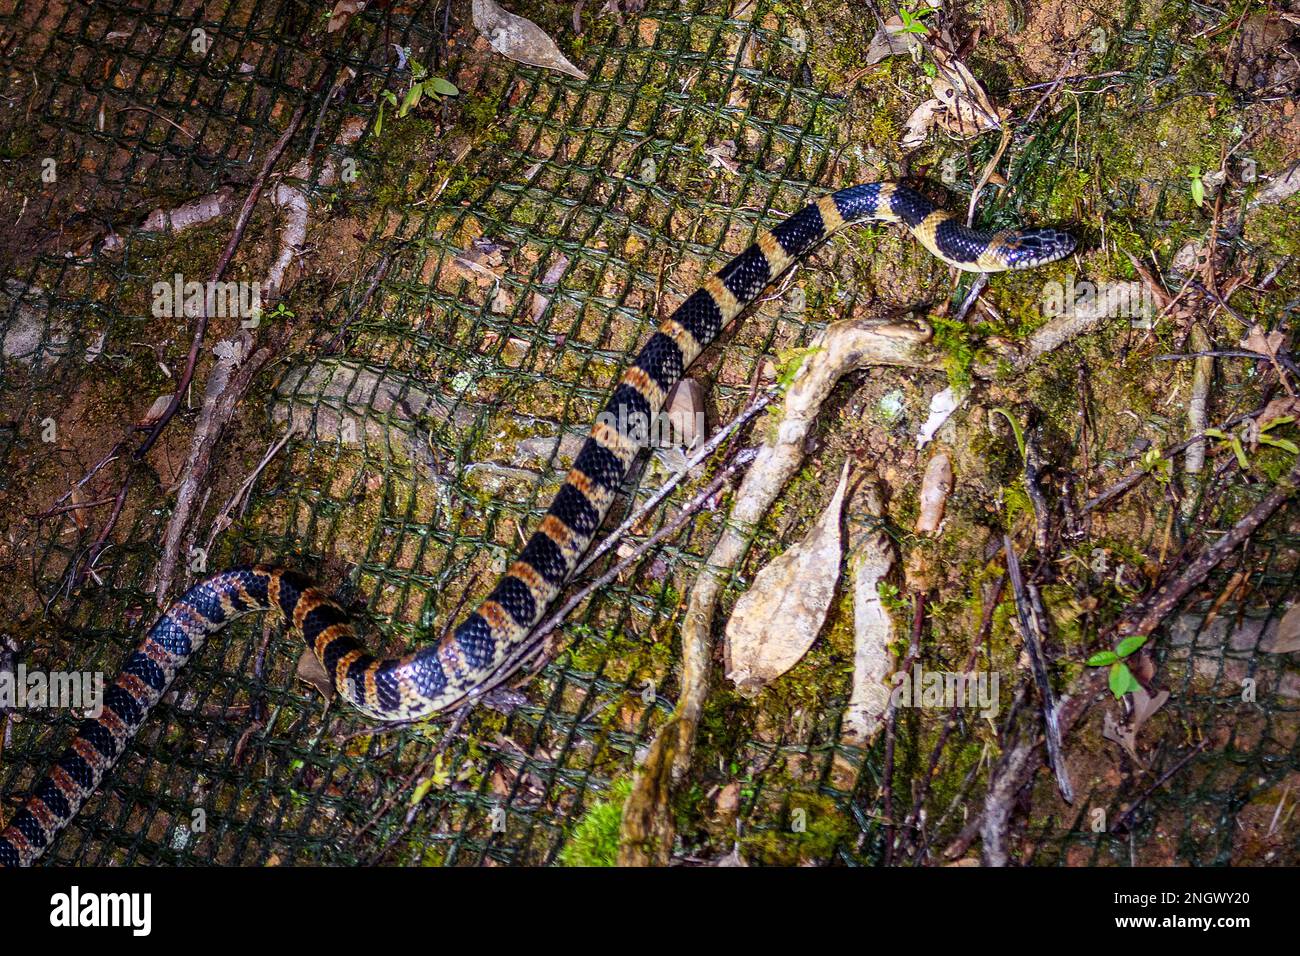 Ryukyu odd-tooth snake (Lycodon semicarinatus) from Amami Oshima, Japan. Stock Photo